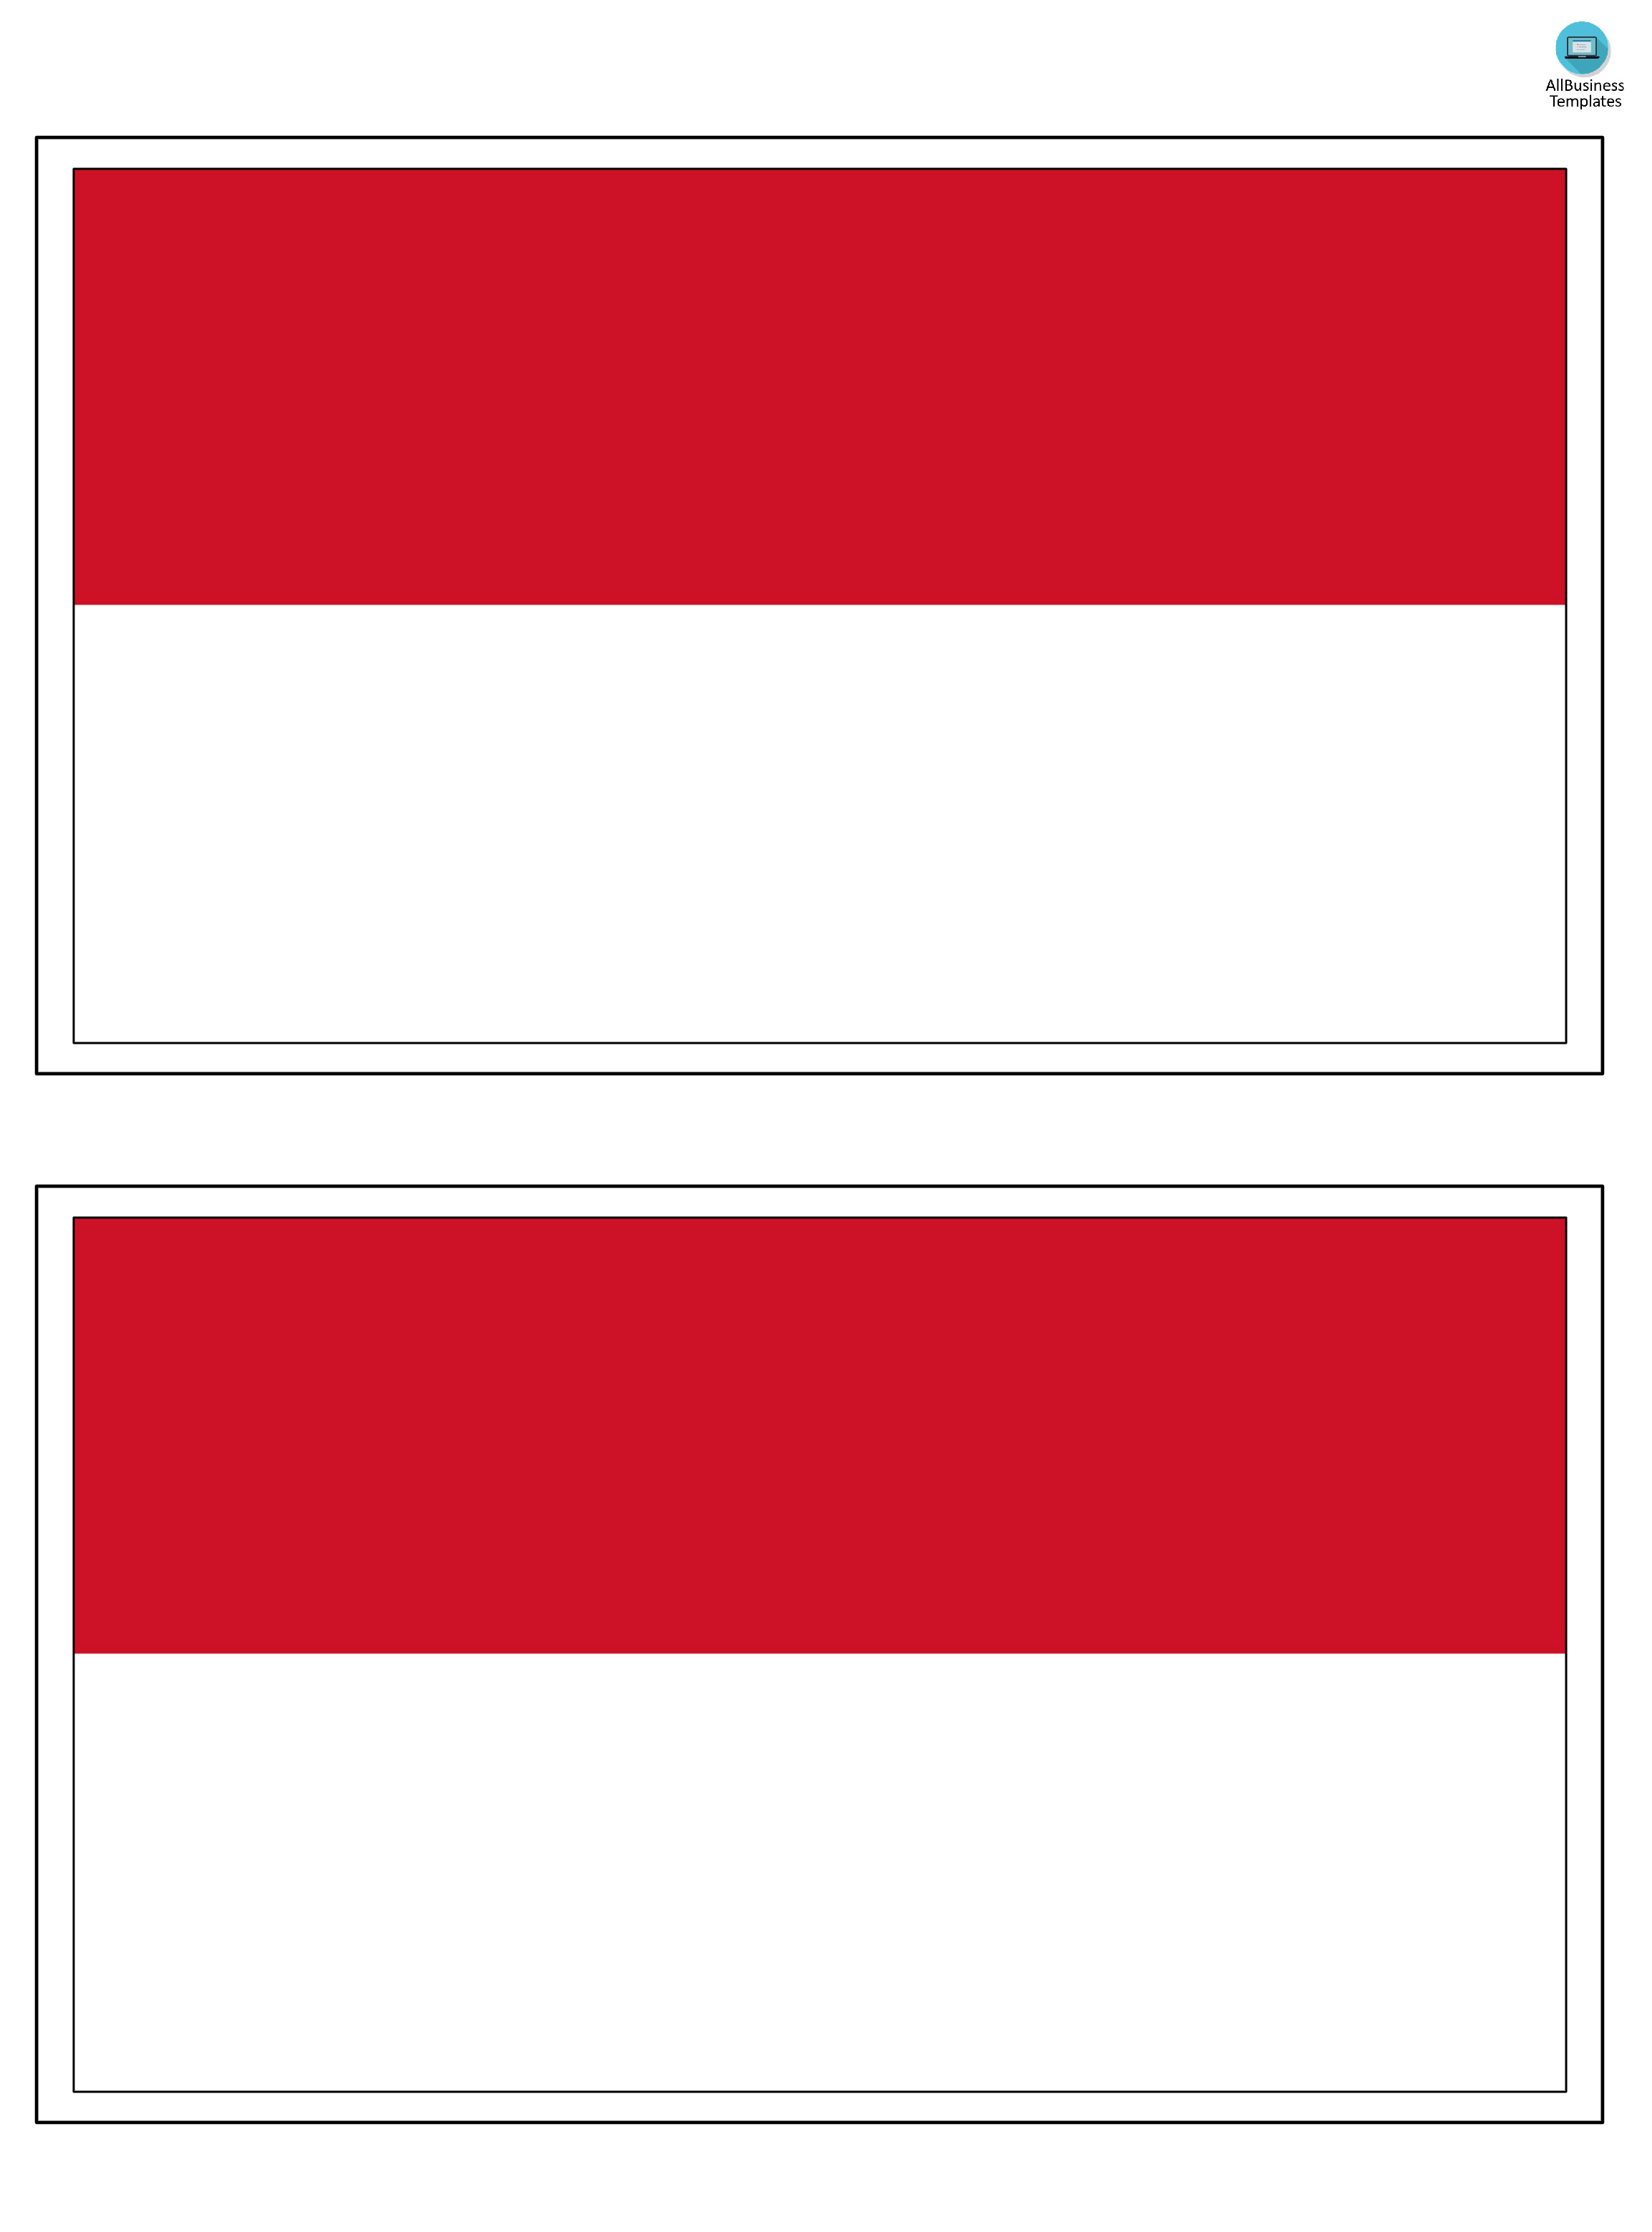 Indonesia printable flag | Templates at allbusinesstemplates.com